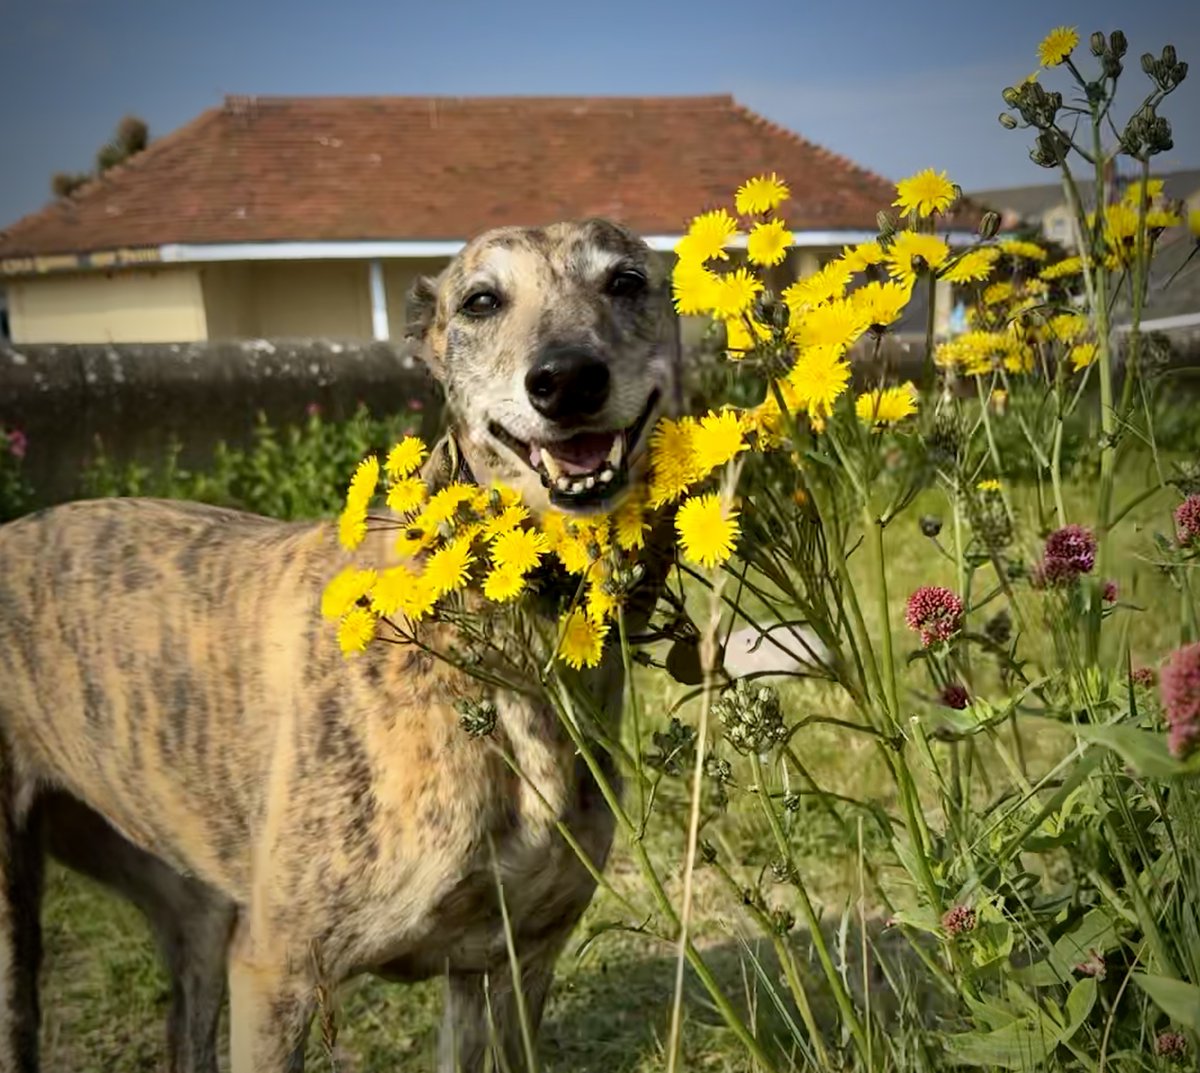 Good morning from sunny Minehead... #Greyhound #Minehead #Exmoor #SummerVibes